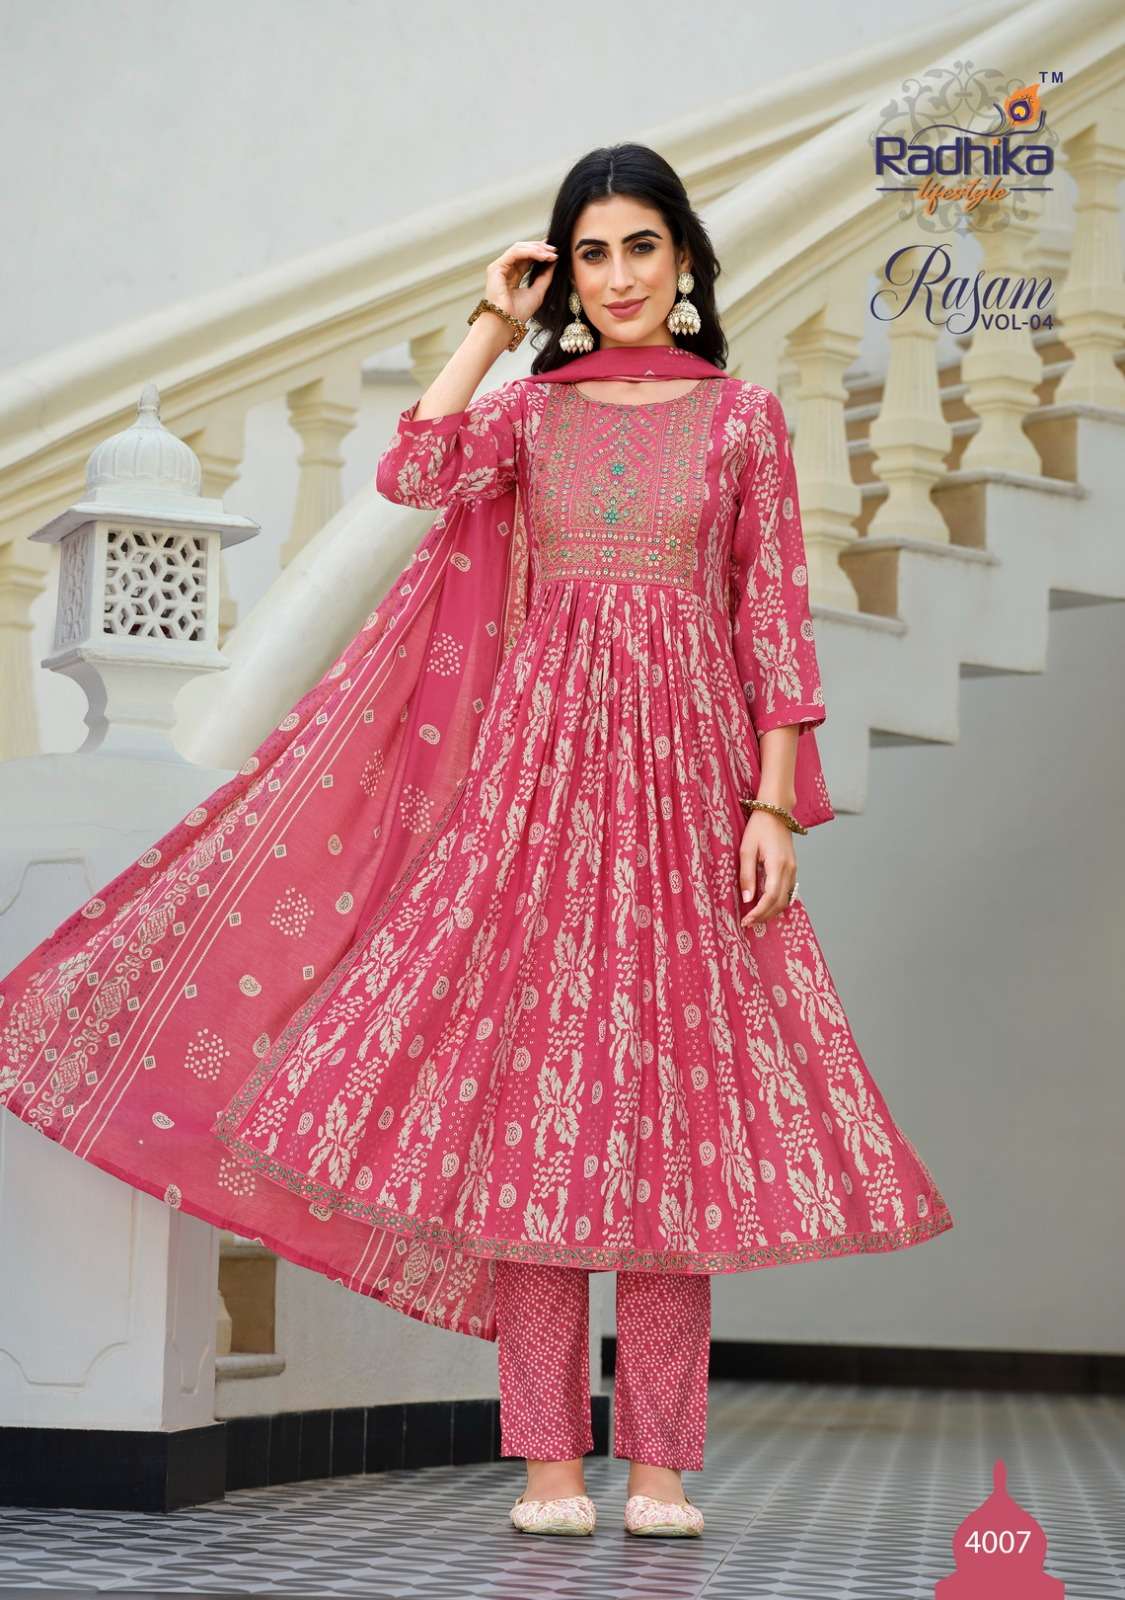 Rasam Vol 4 Buy Radhika Life Style Online Wholesaler Latest Collection Kurta Suit Set